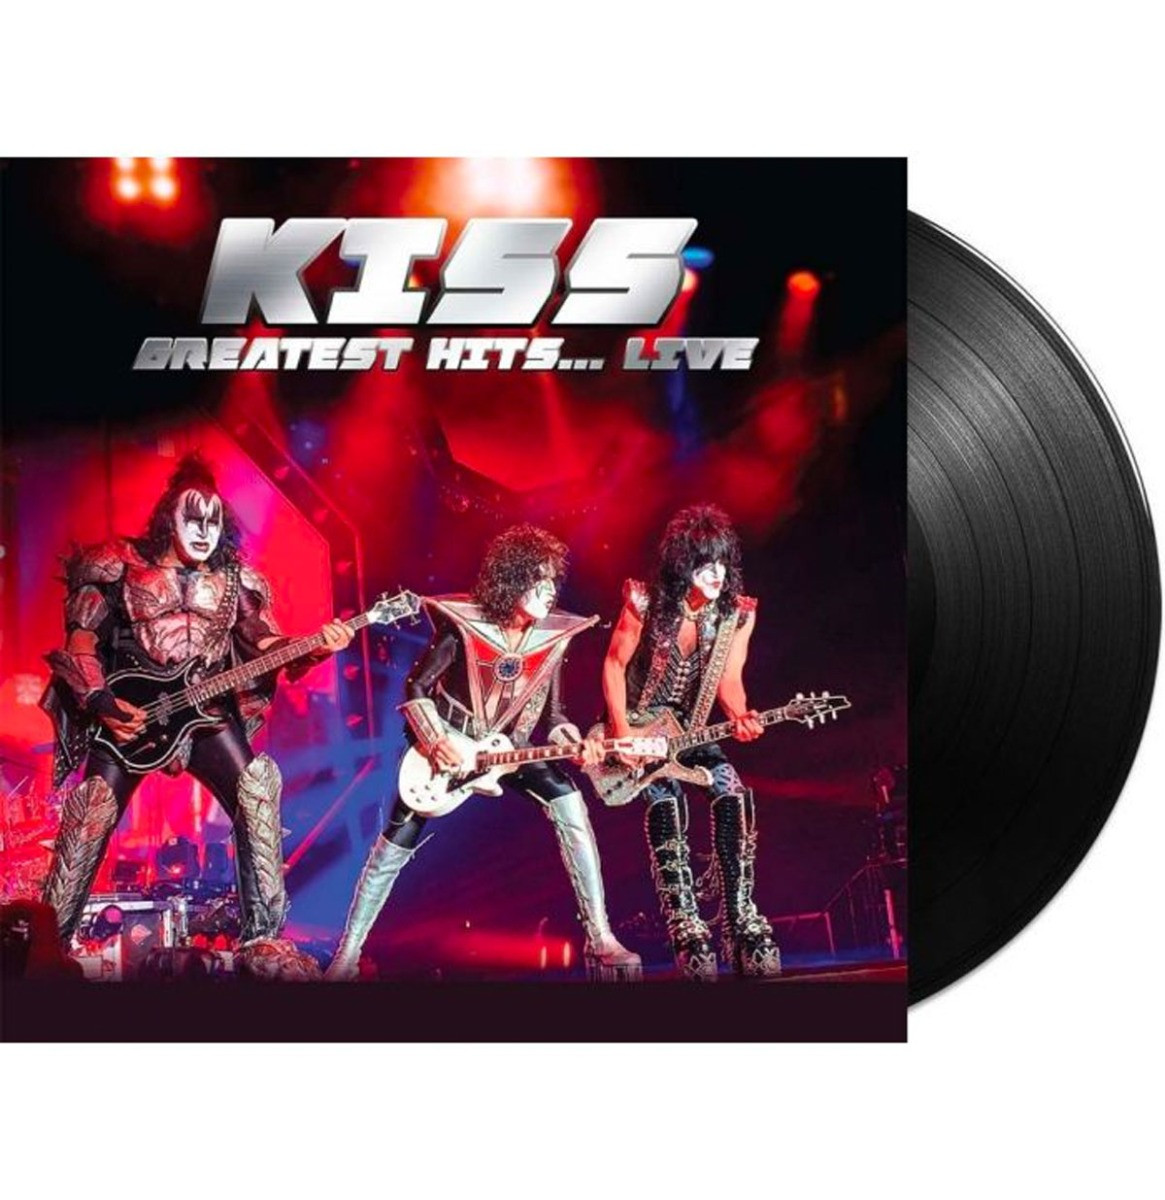 Kiss - Greatest Hits... Live LP